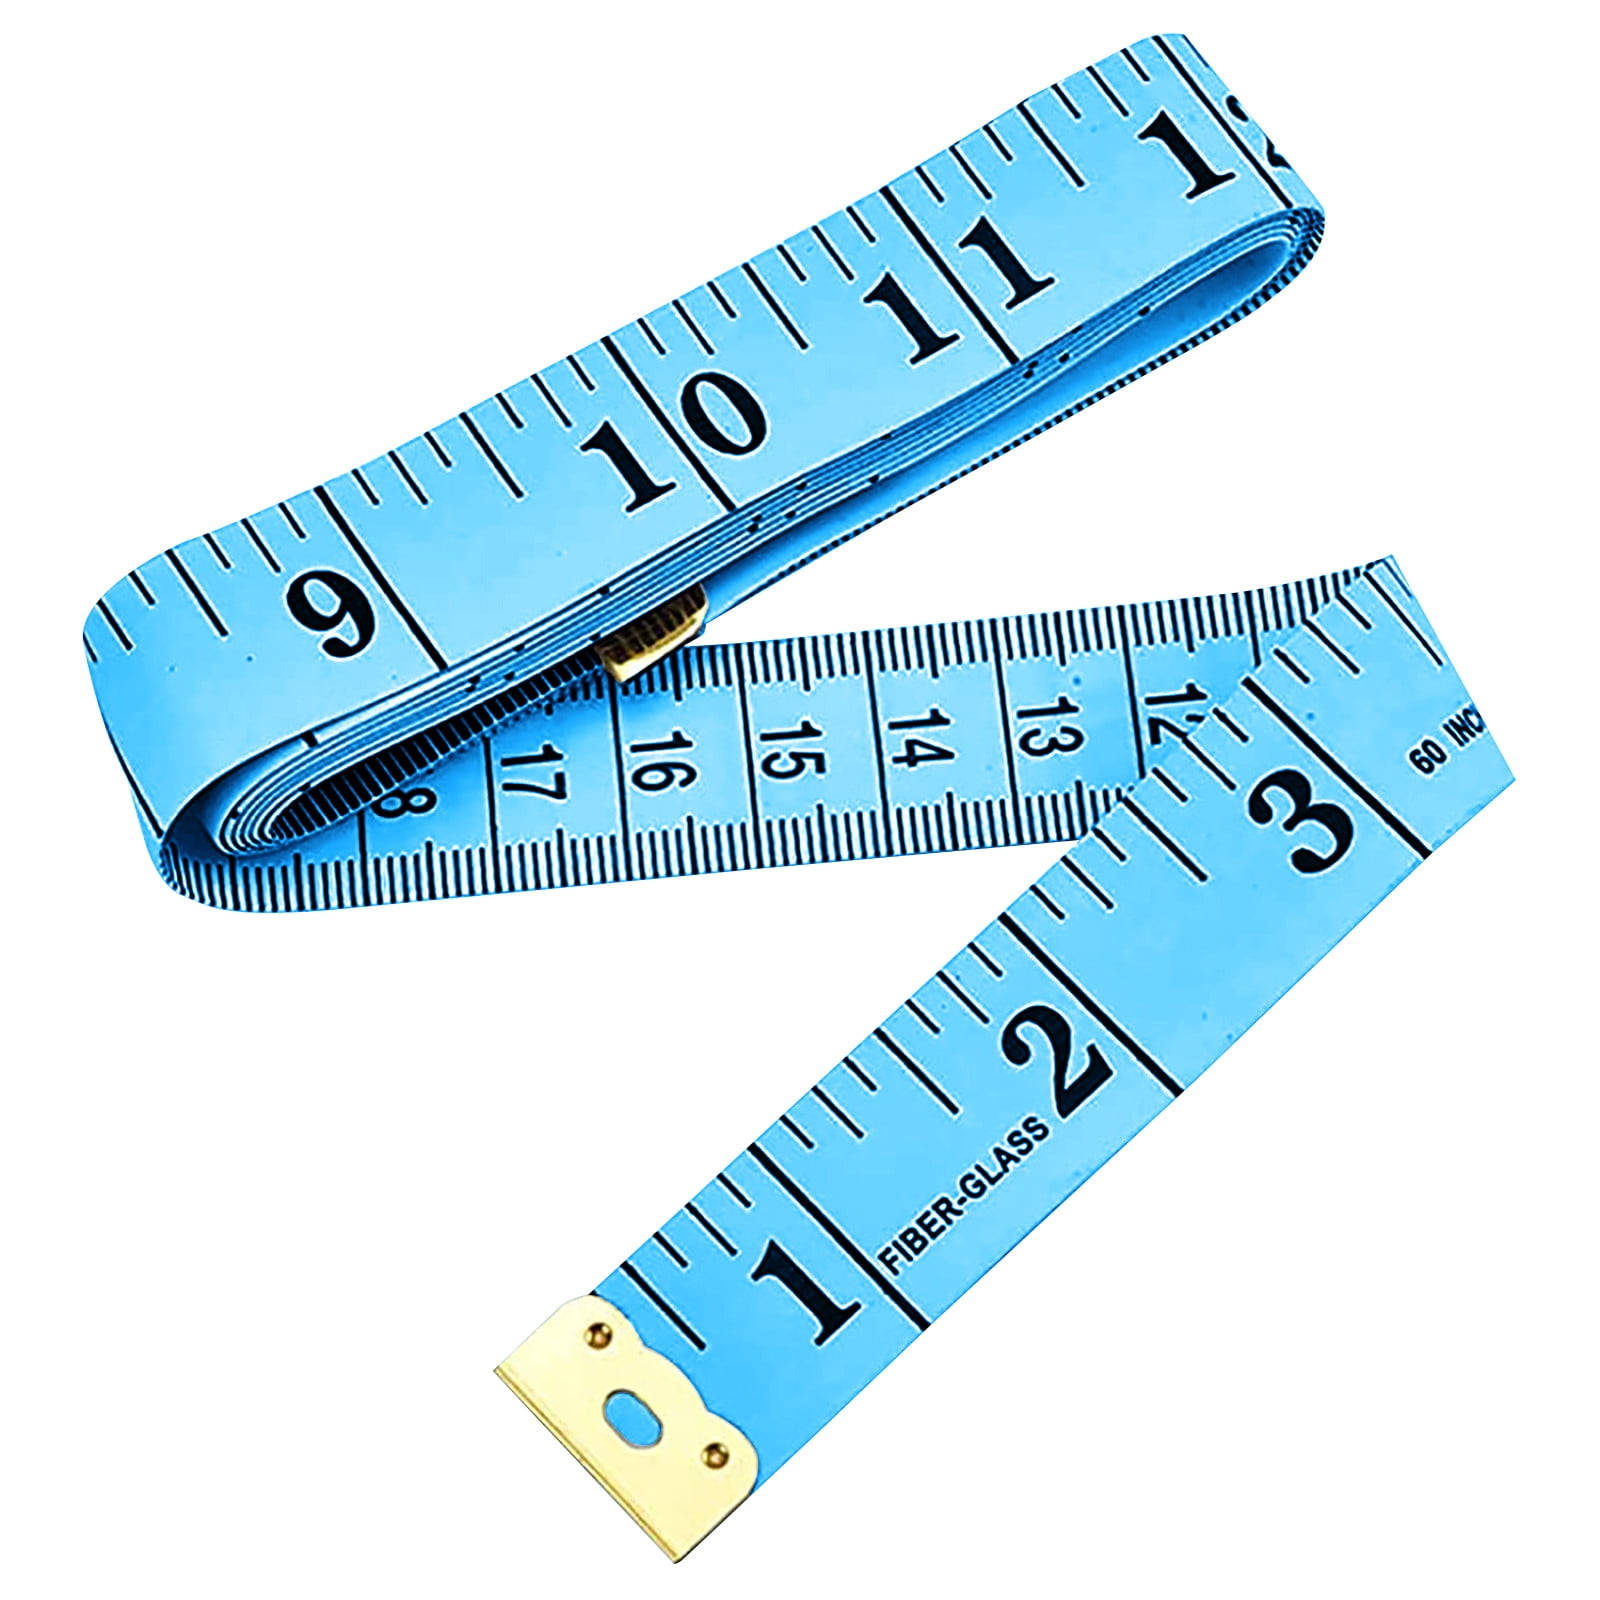 Hemline Adjustale Body Tape Measure